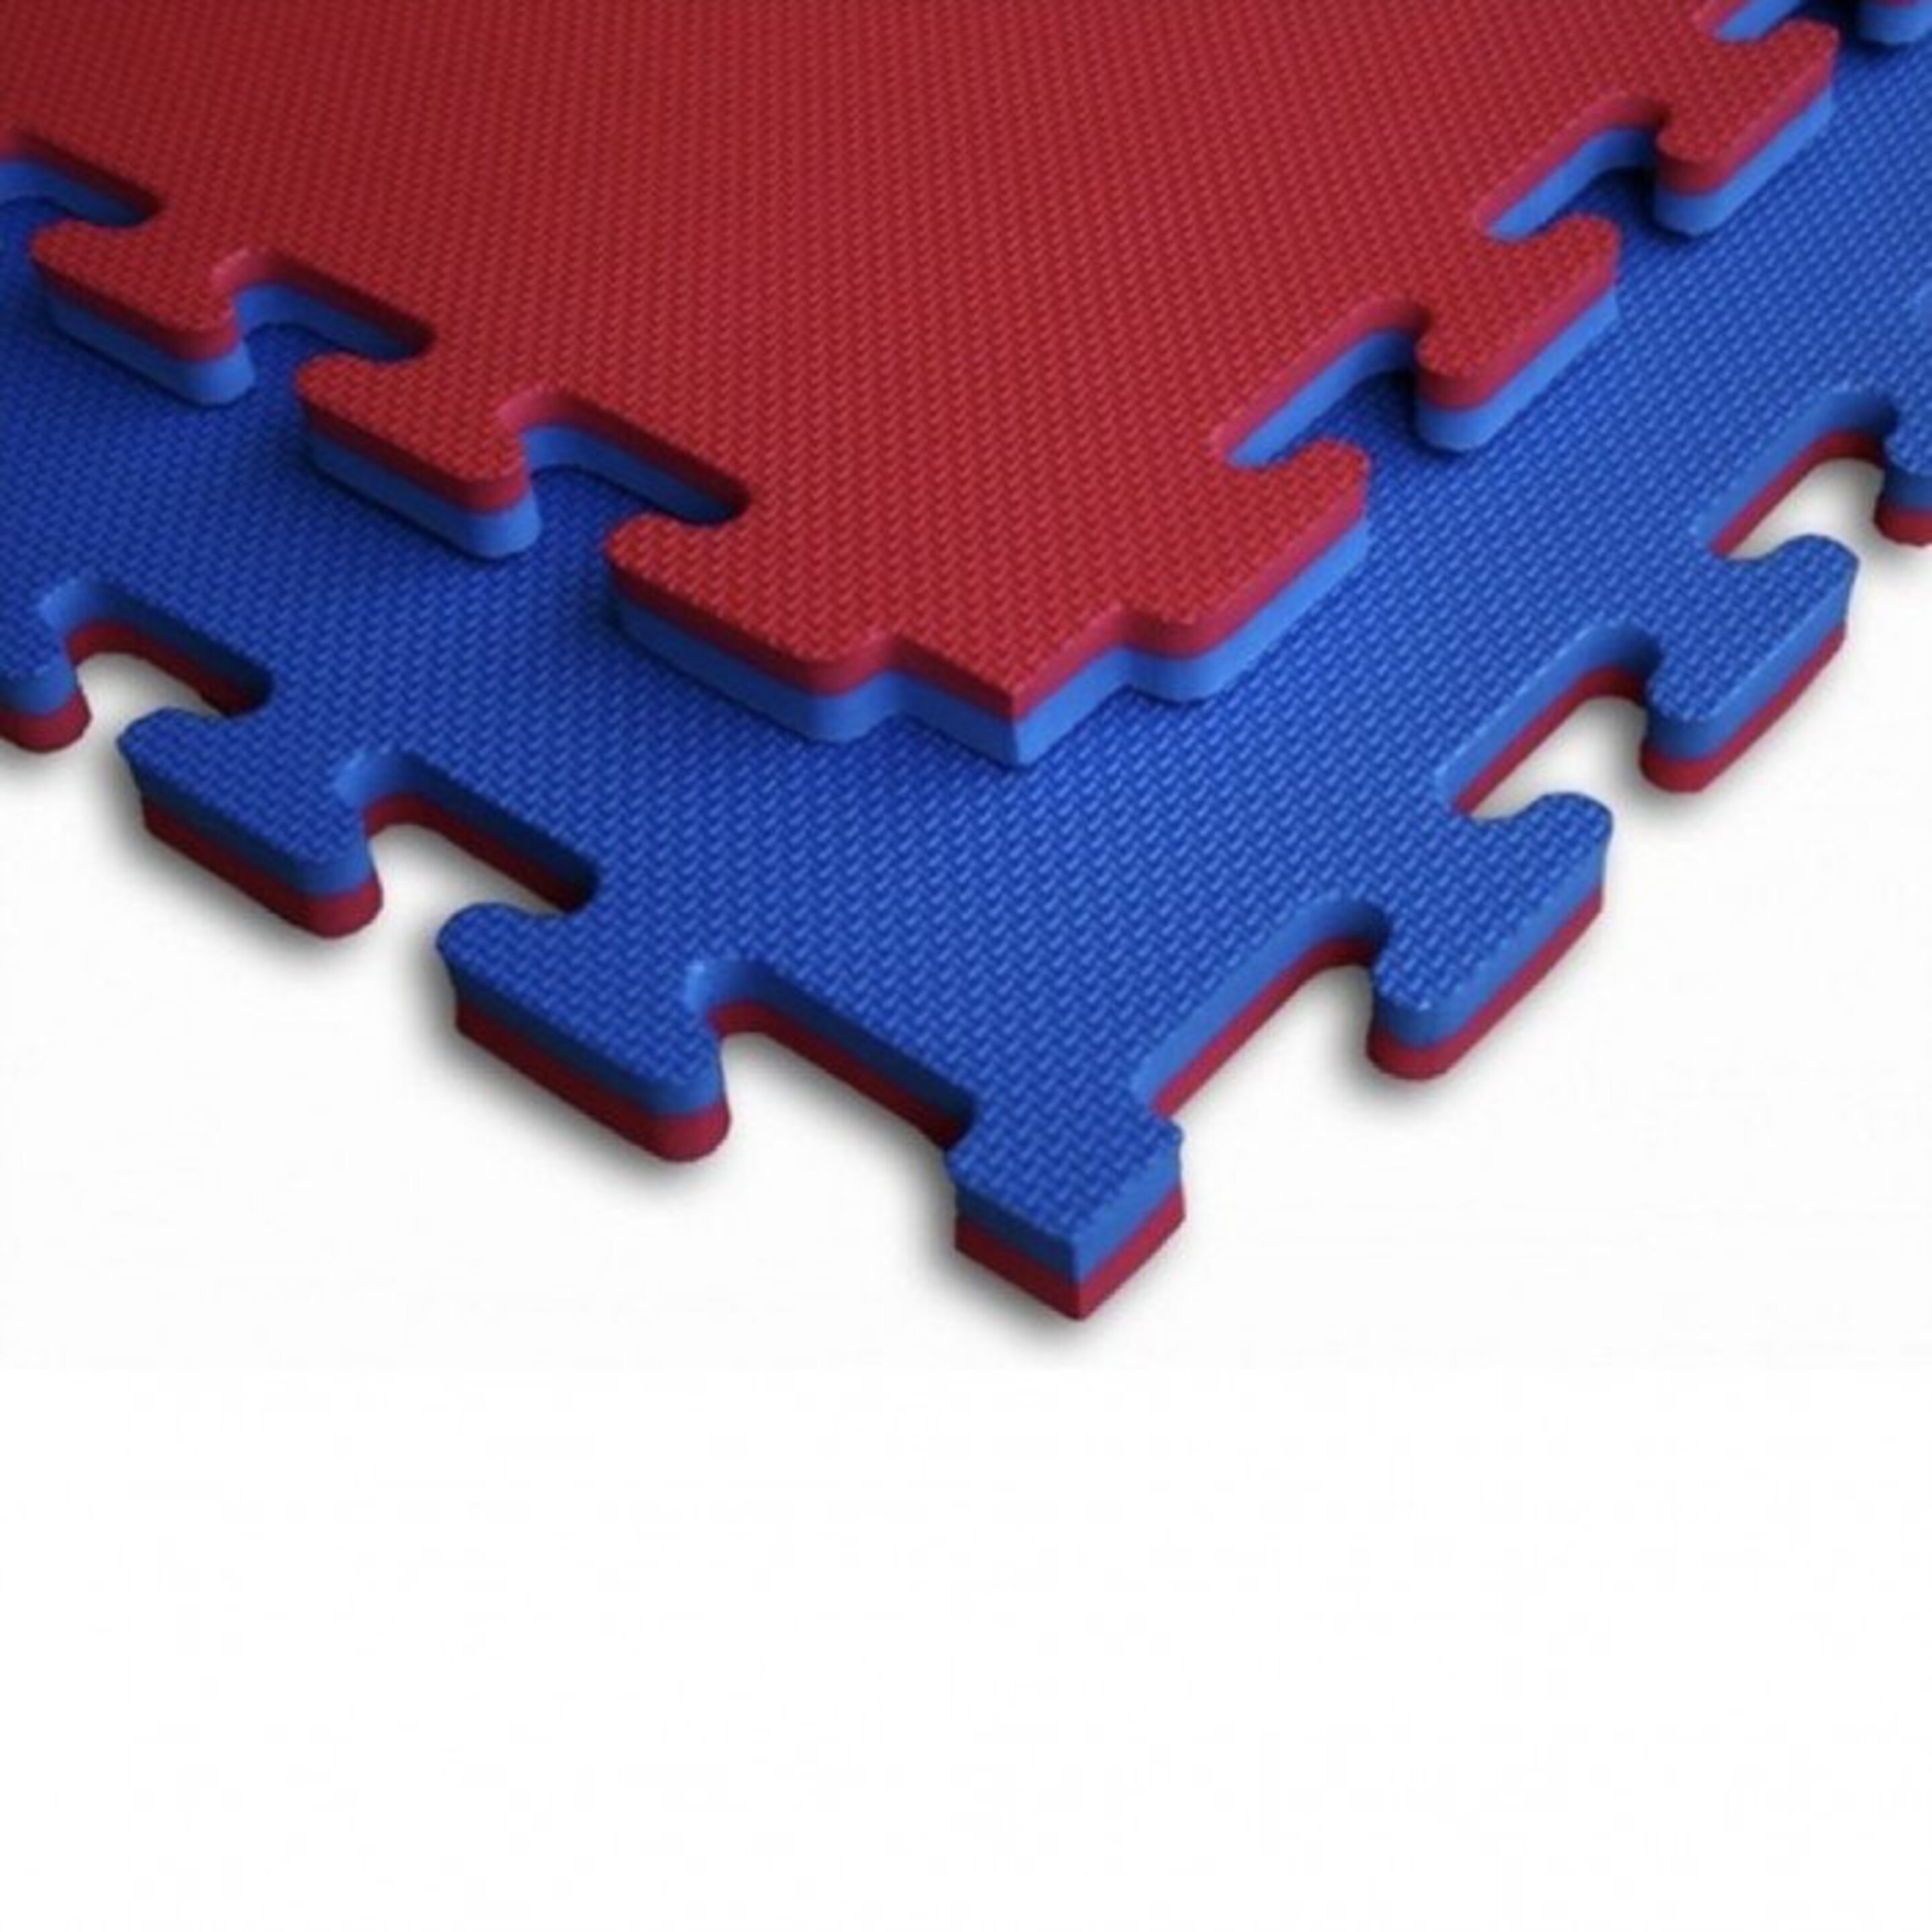 Suelo Puzzle Eva Mat
1000x1000x25mm Rojo/azul (Alta Densidad)